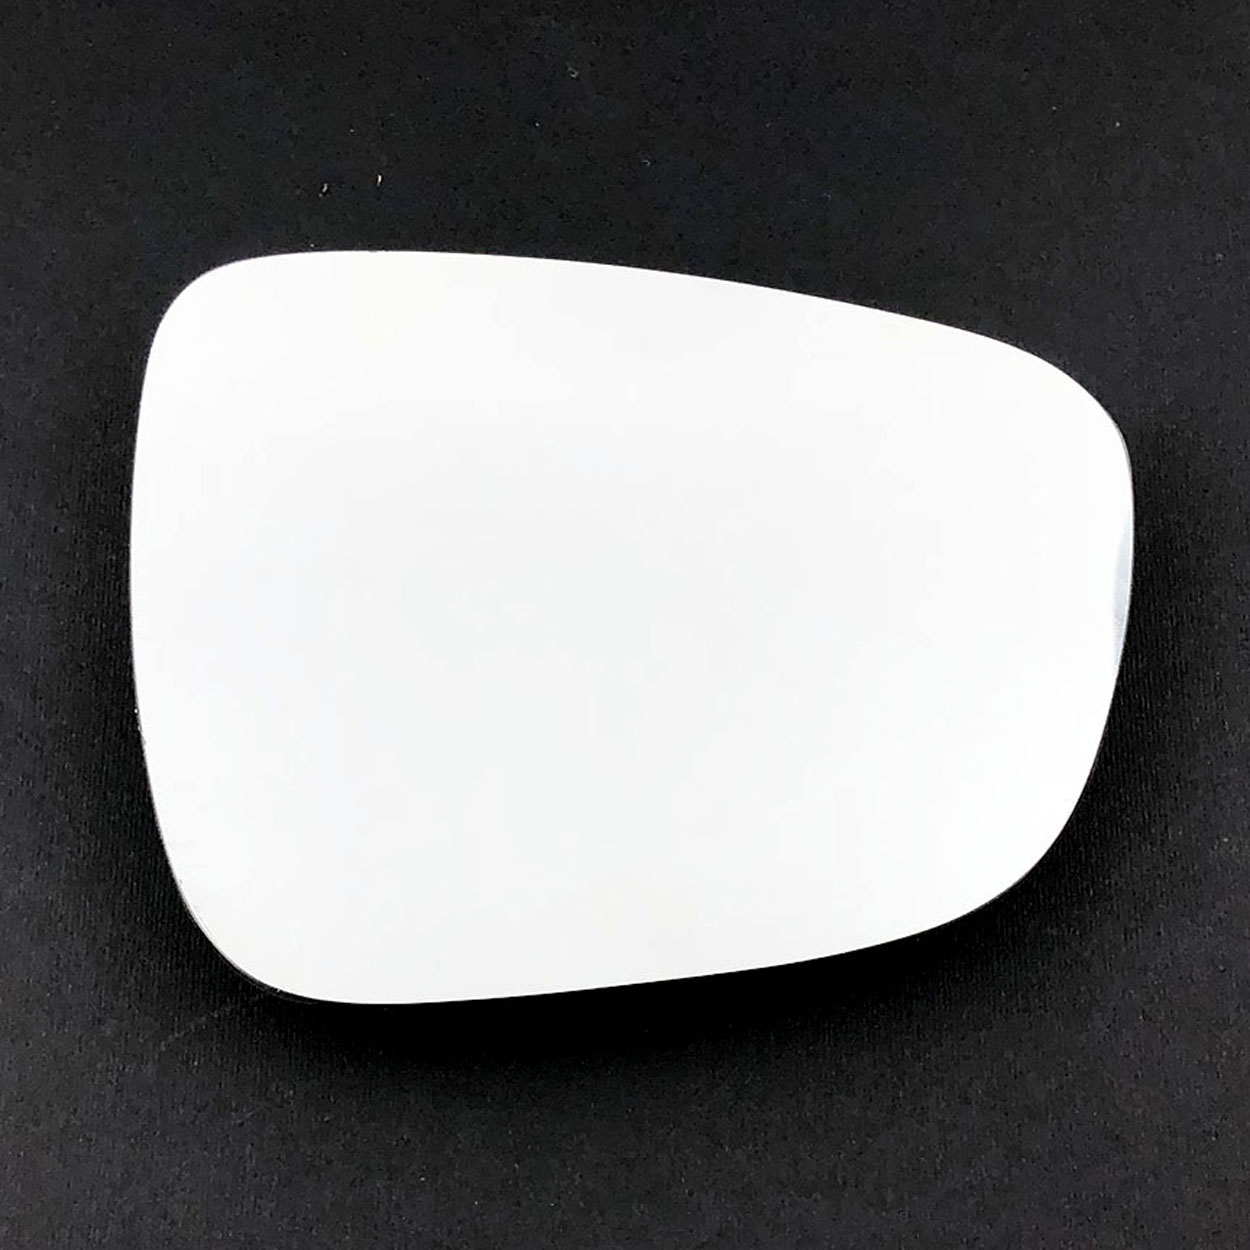 Suzuki CELERIO Wing Mirror Glass RIGHT HAND ( UK Driver Side ) 2014 to 2018 – Convex Wing Mirror